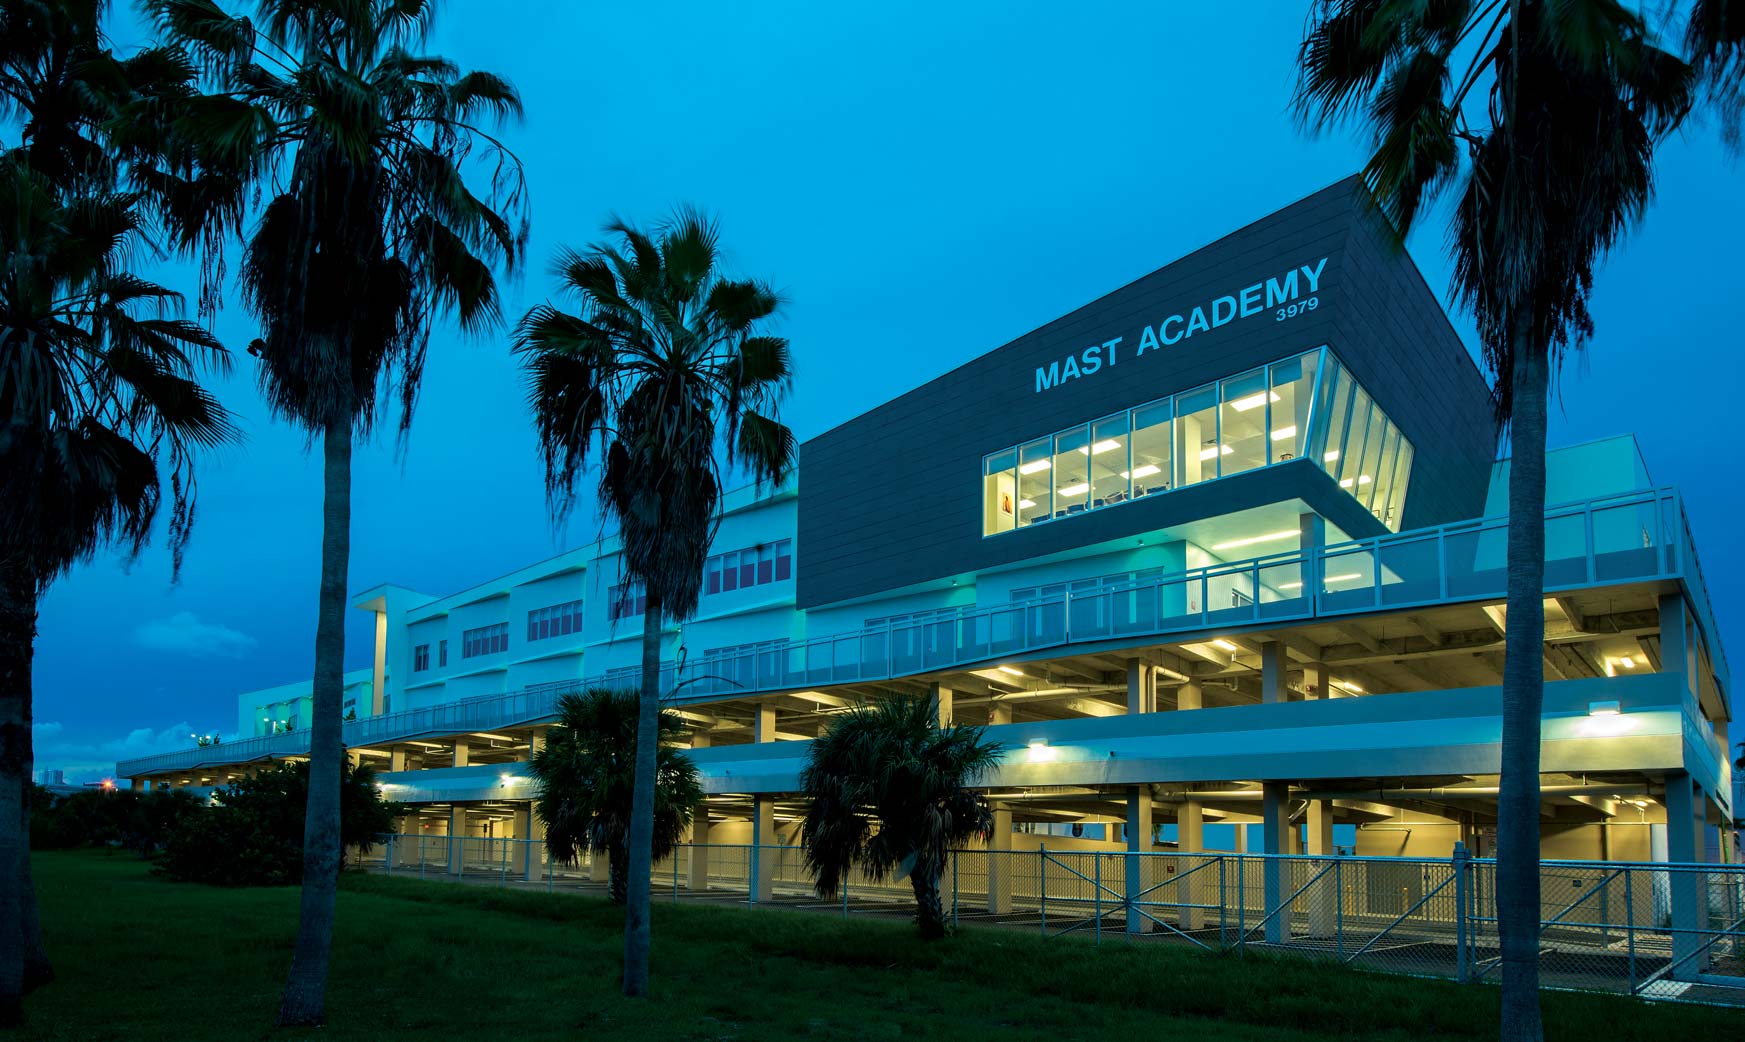 MAST Academy in Key Biscayne